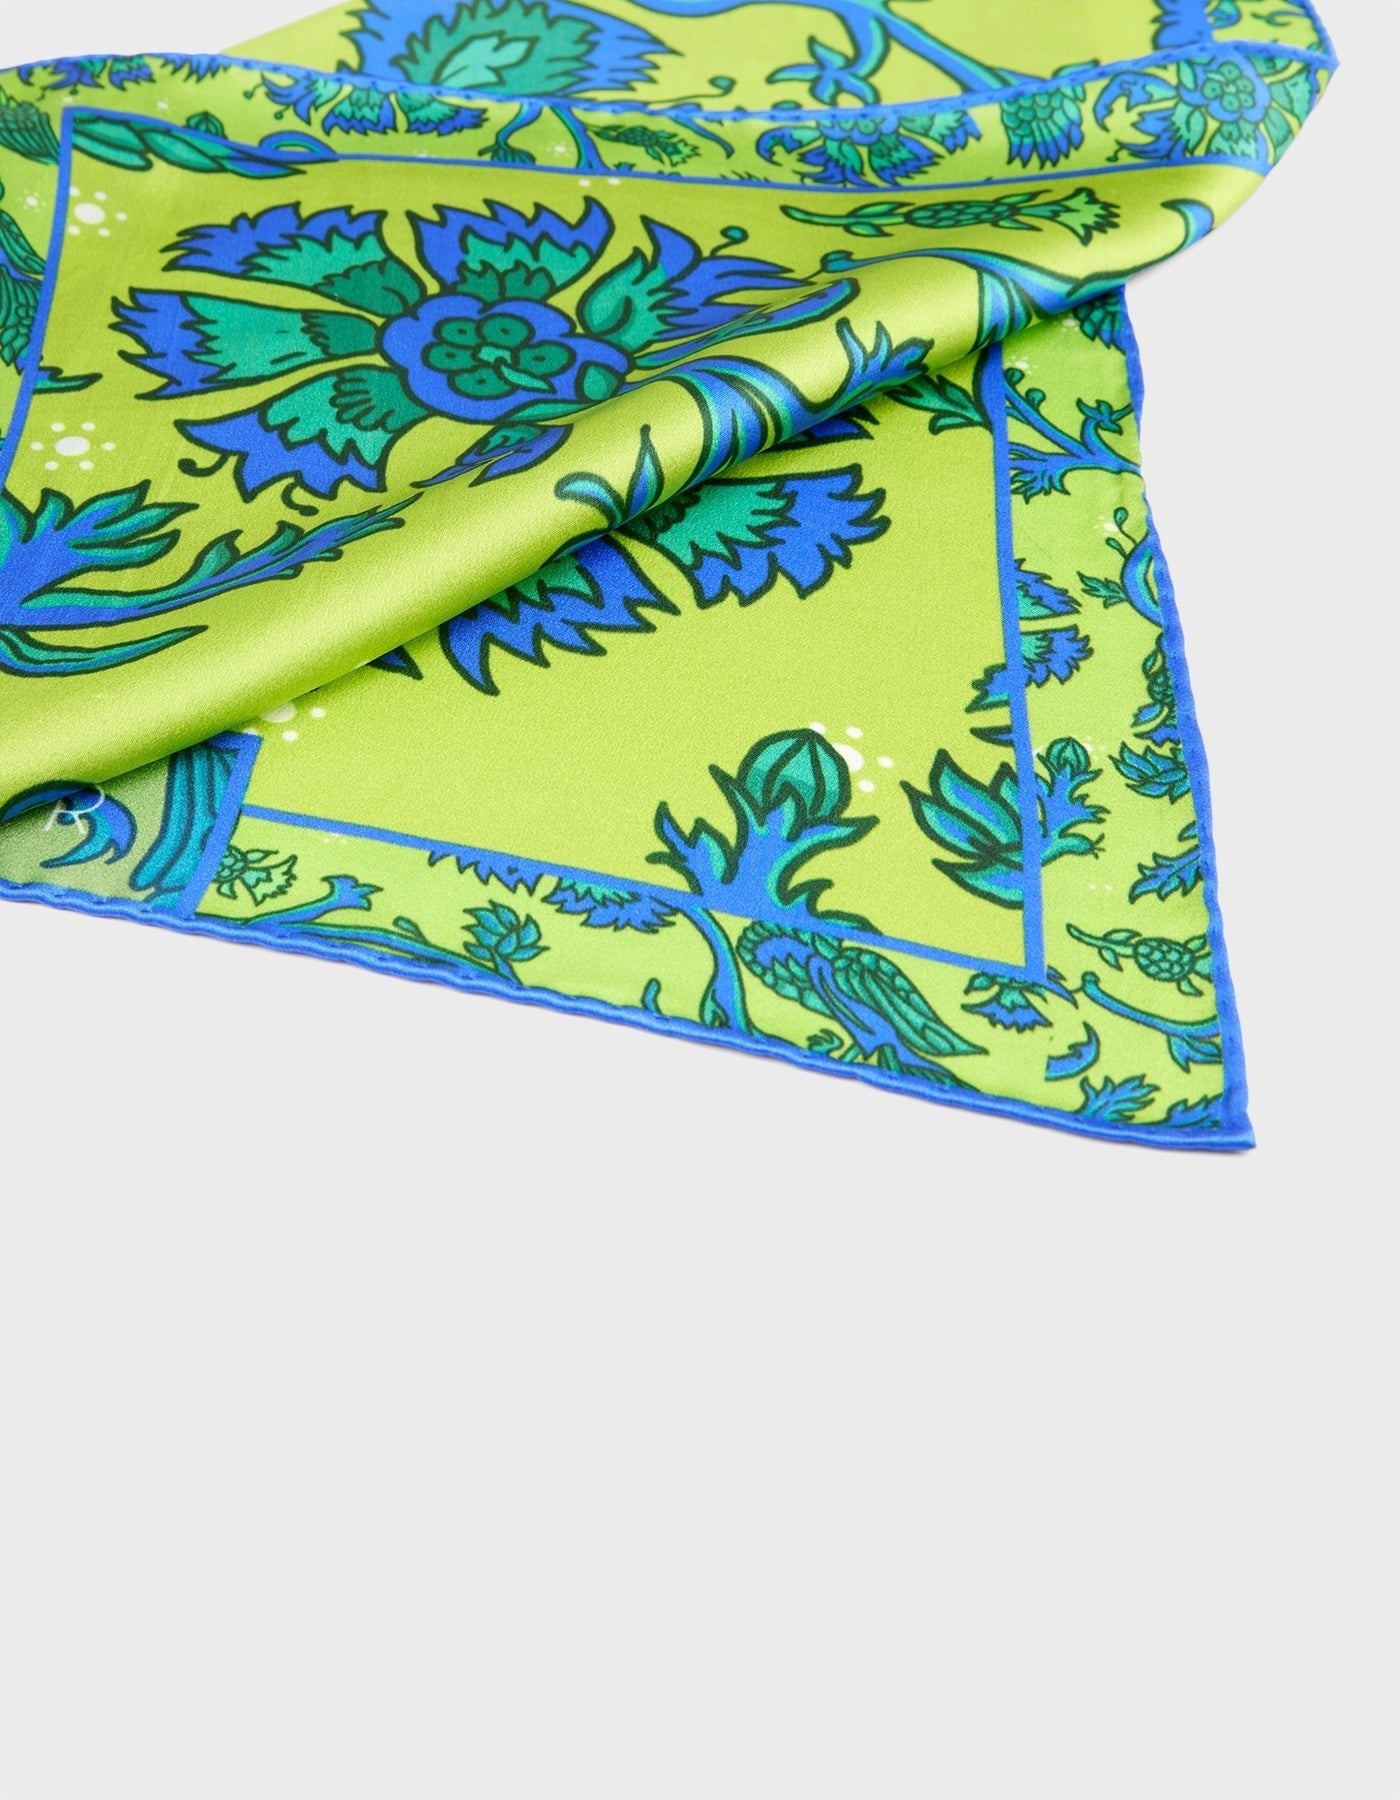 HiVa Atelier | HiVa Silk Scarf 50 X 50 CM Refurnished Vintage Flower - Algae Green & Sodalite Blue | Beautiful and Versatile